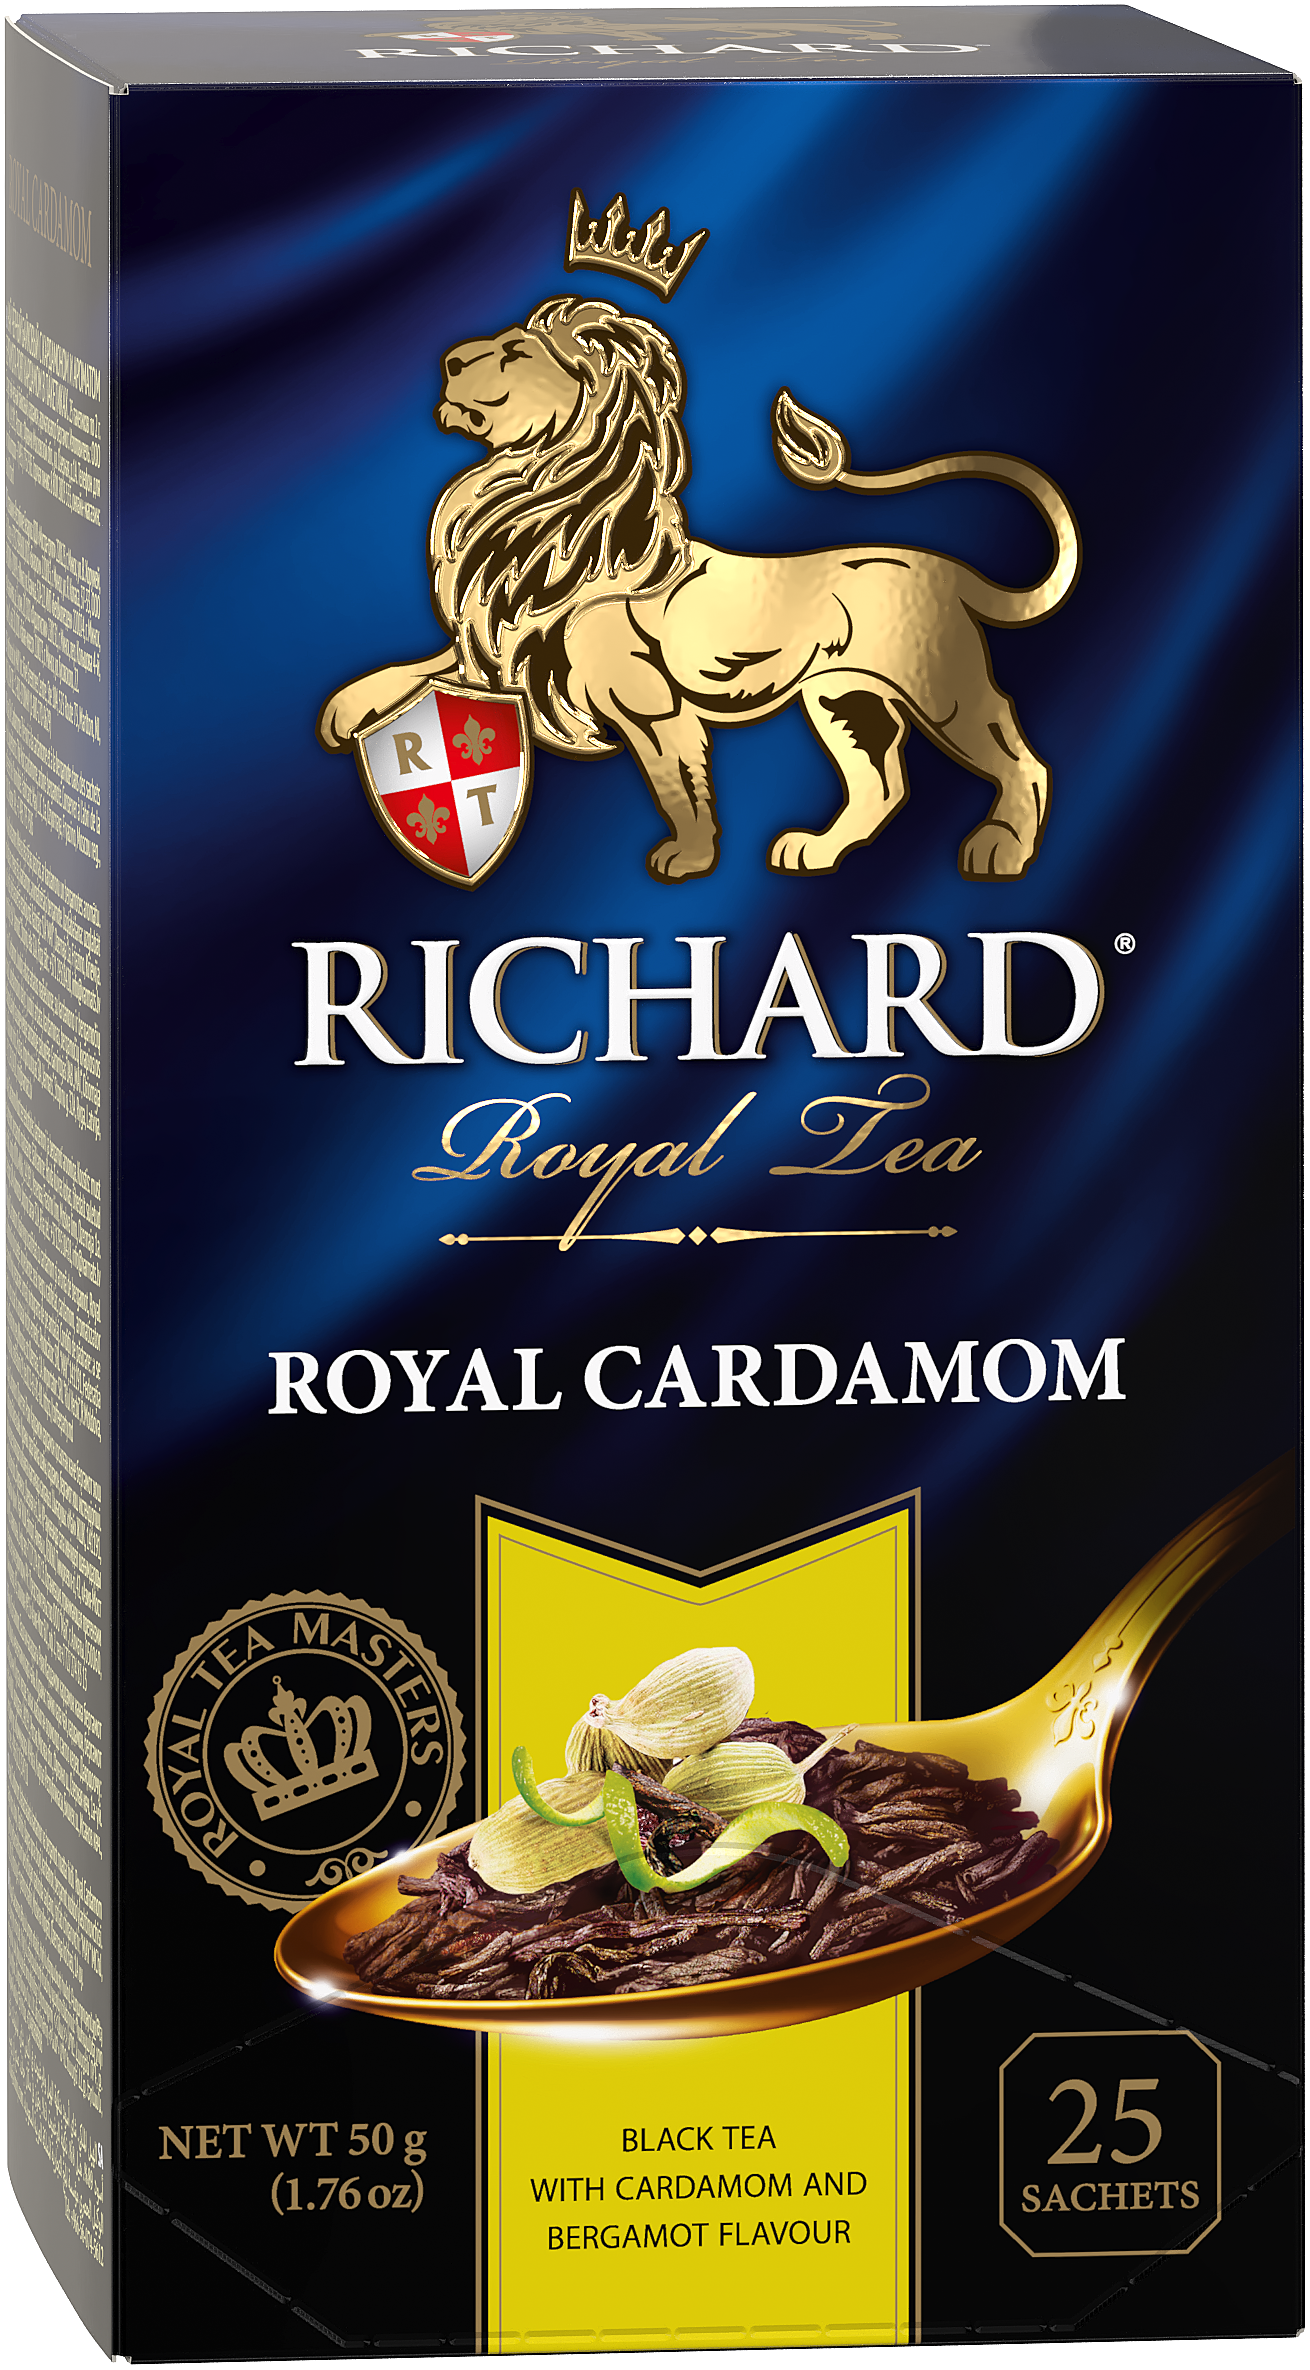 Richard Royal Cardamom, flavoured black tea in sachets, 25 sachets, 50g